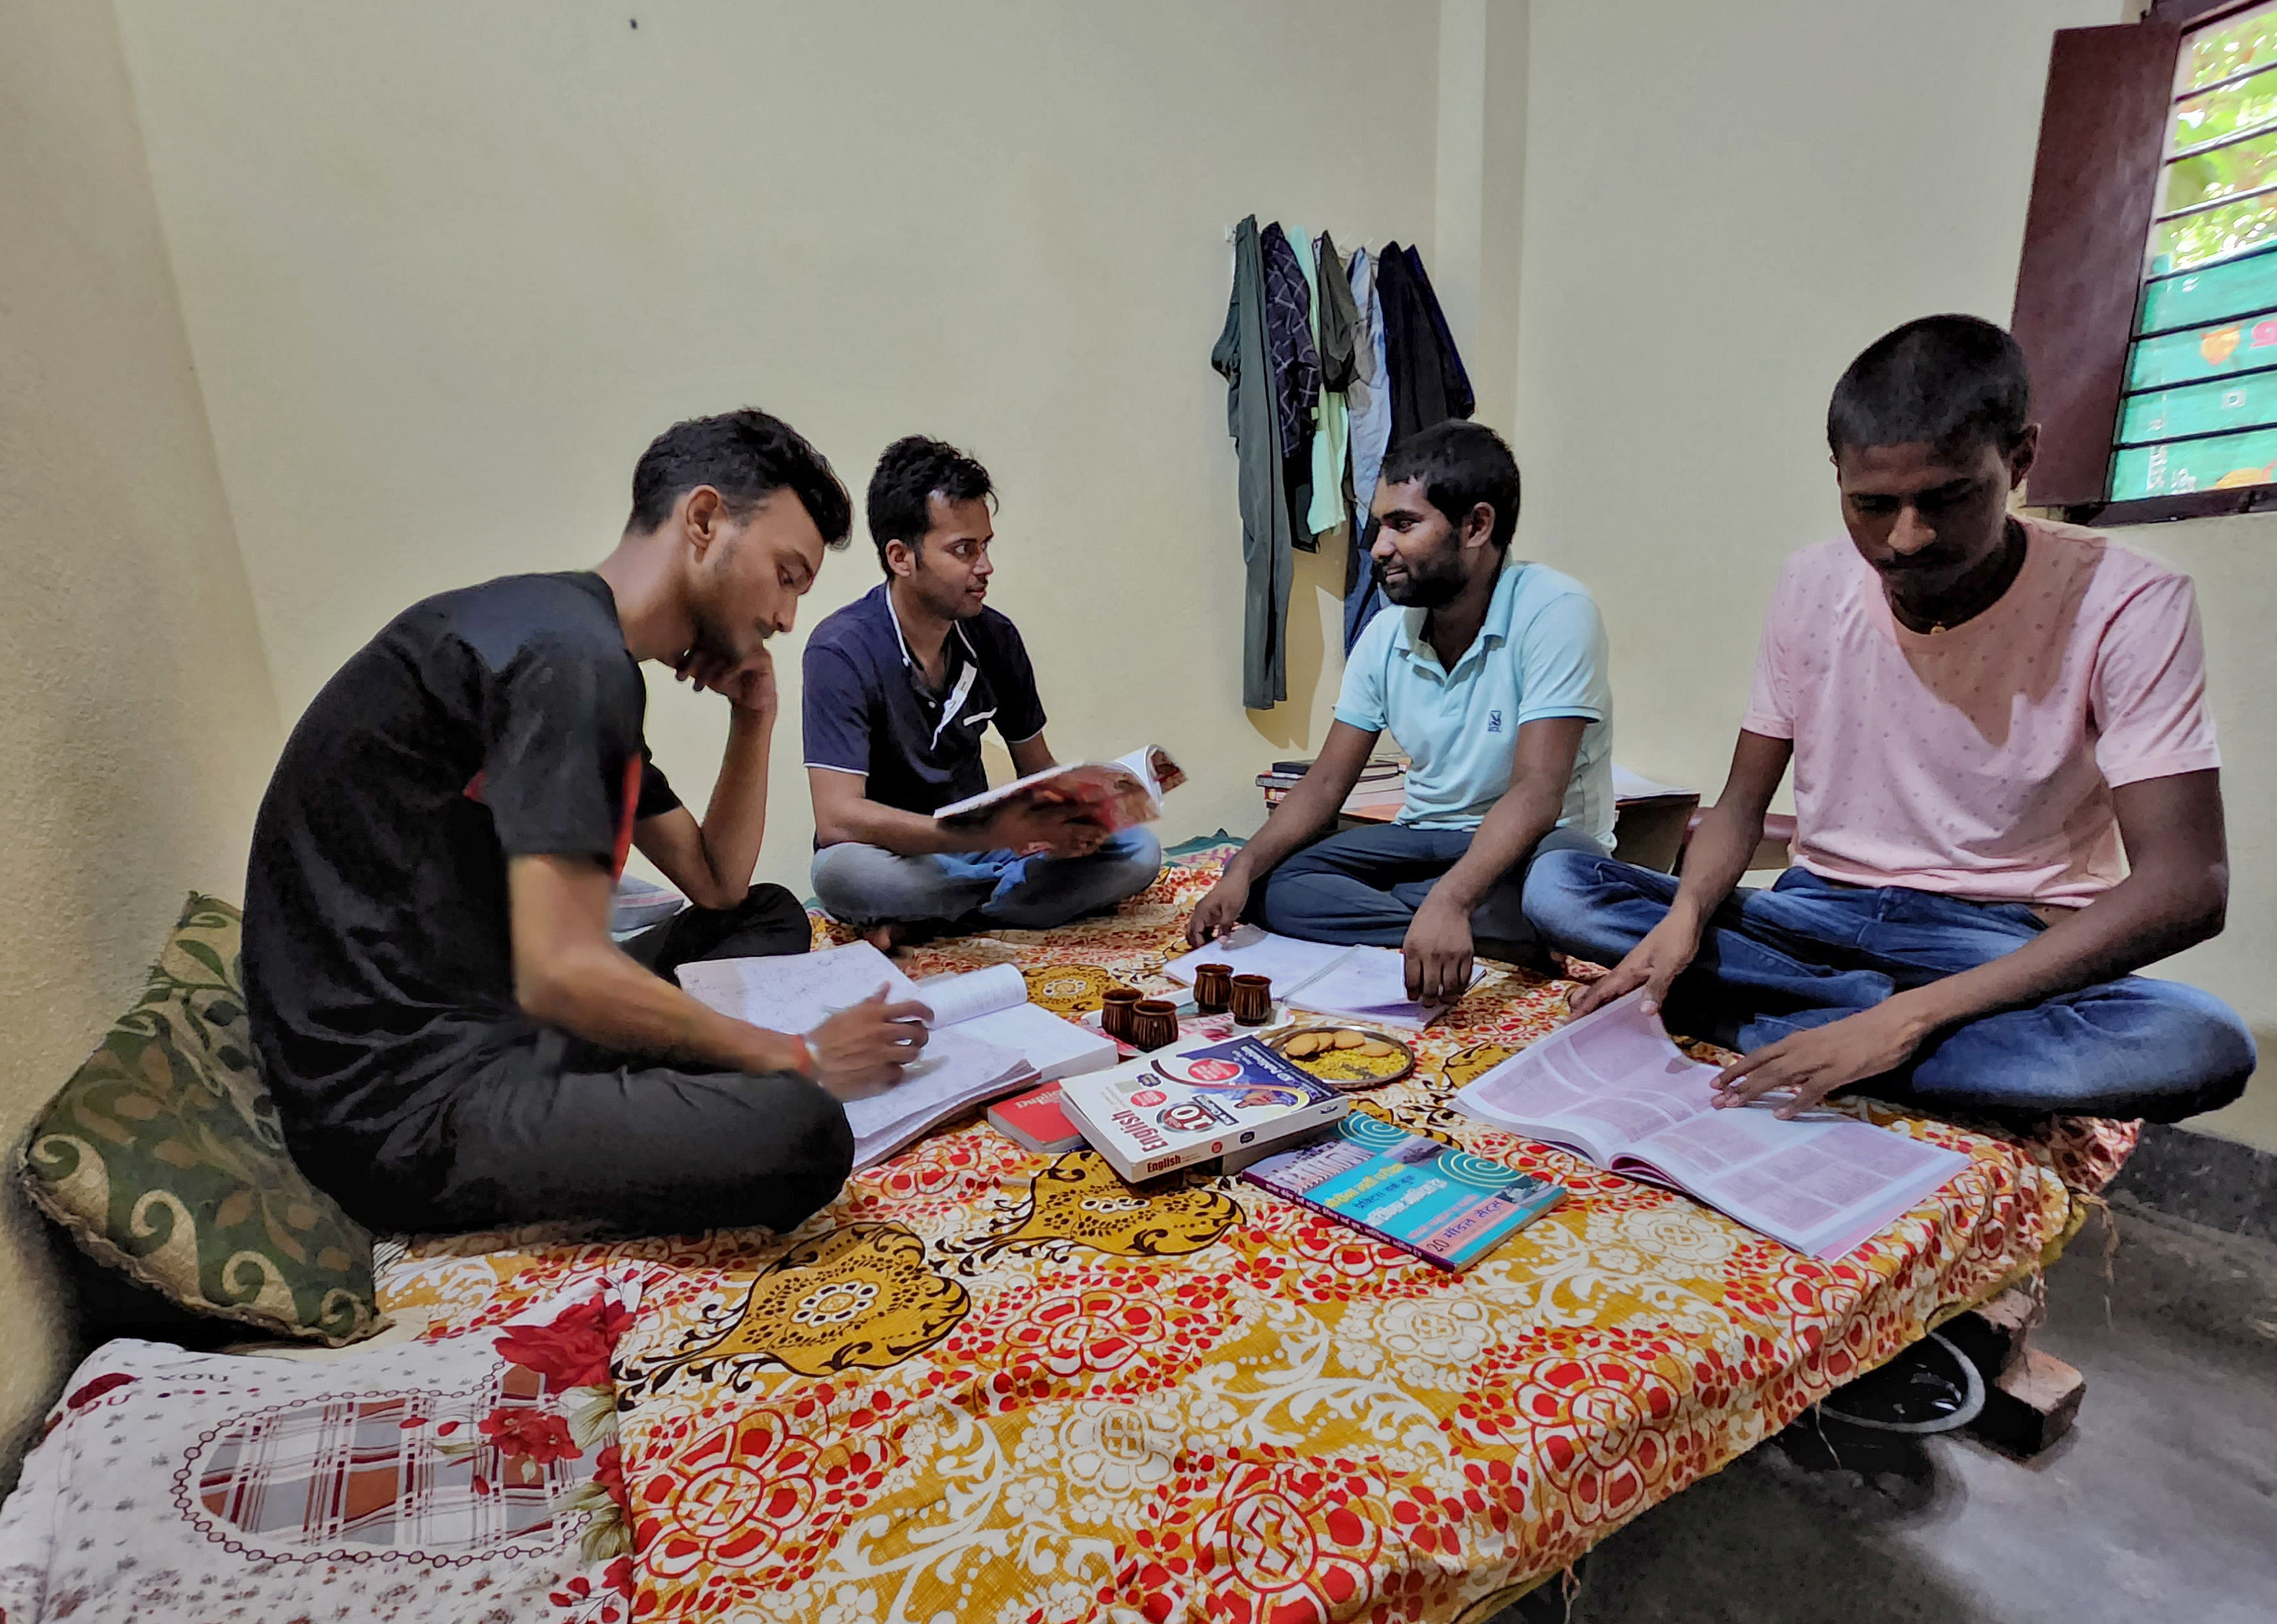 Government job aspirants Rahul Patel, Prem Prakash, Ravi Ranjan and Gupteshwar Kumar take part in a group study as they prepare for railway job in a rented room in Arrah